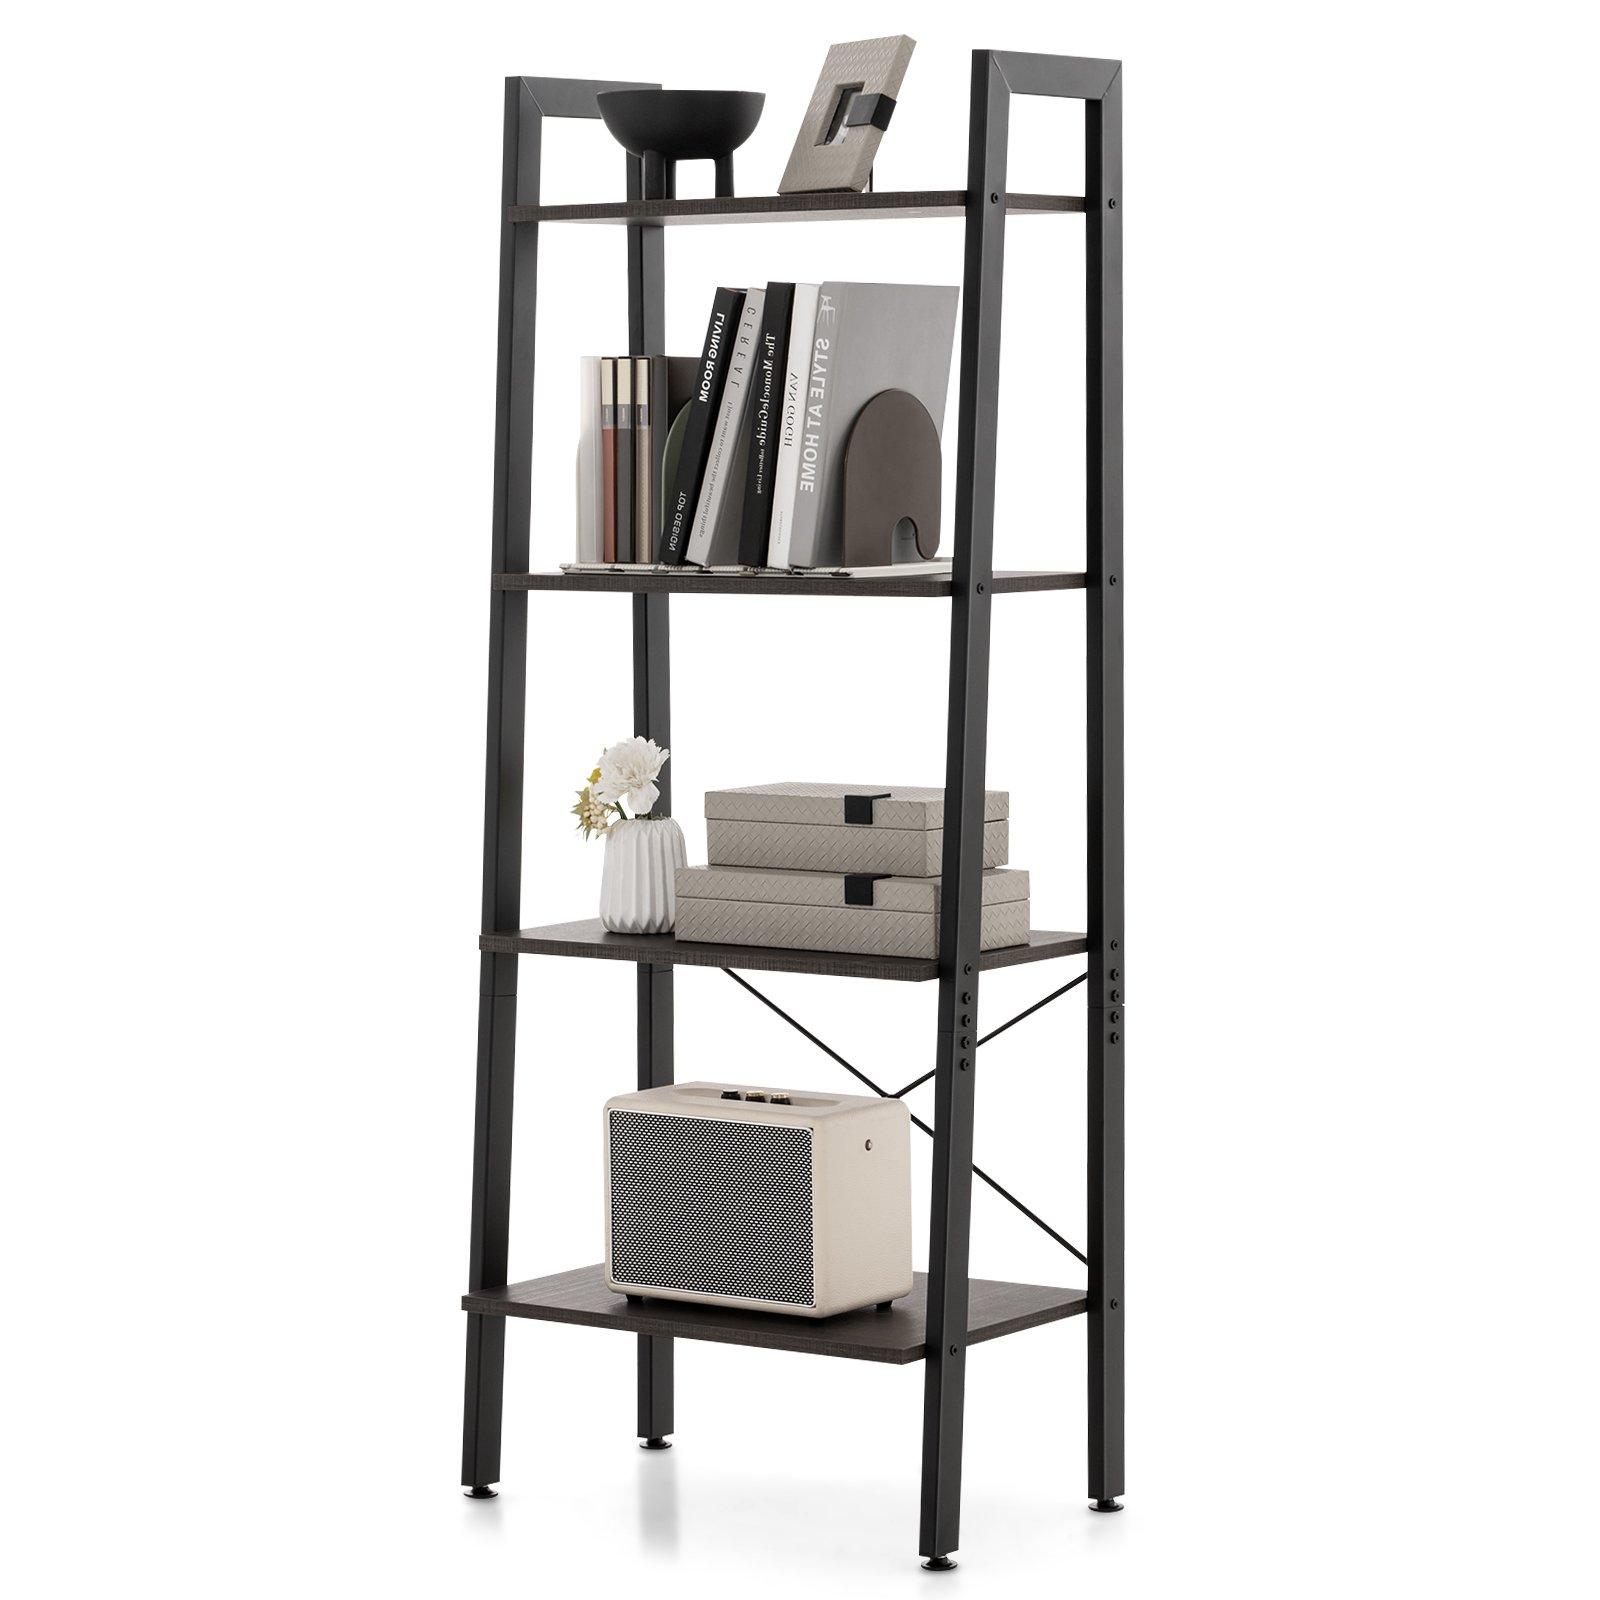 4-Tier Bookshelf Industrial Display Shelving Unit Standing Storage Shelf